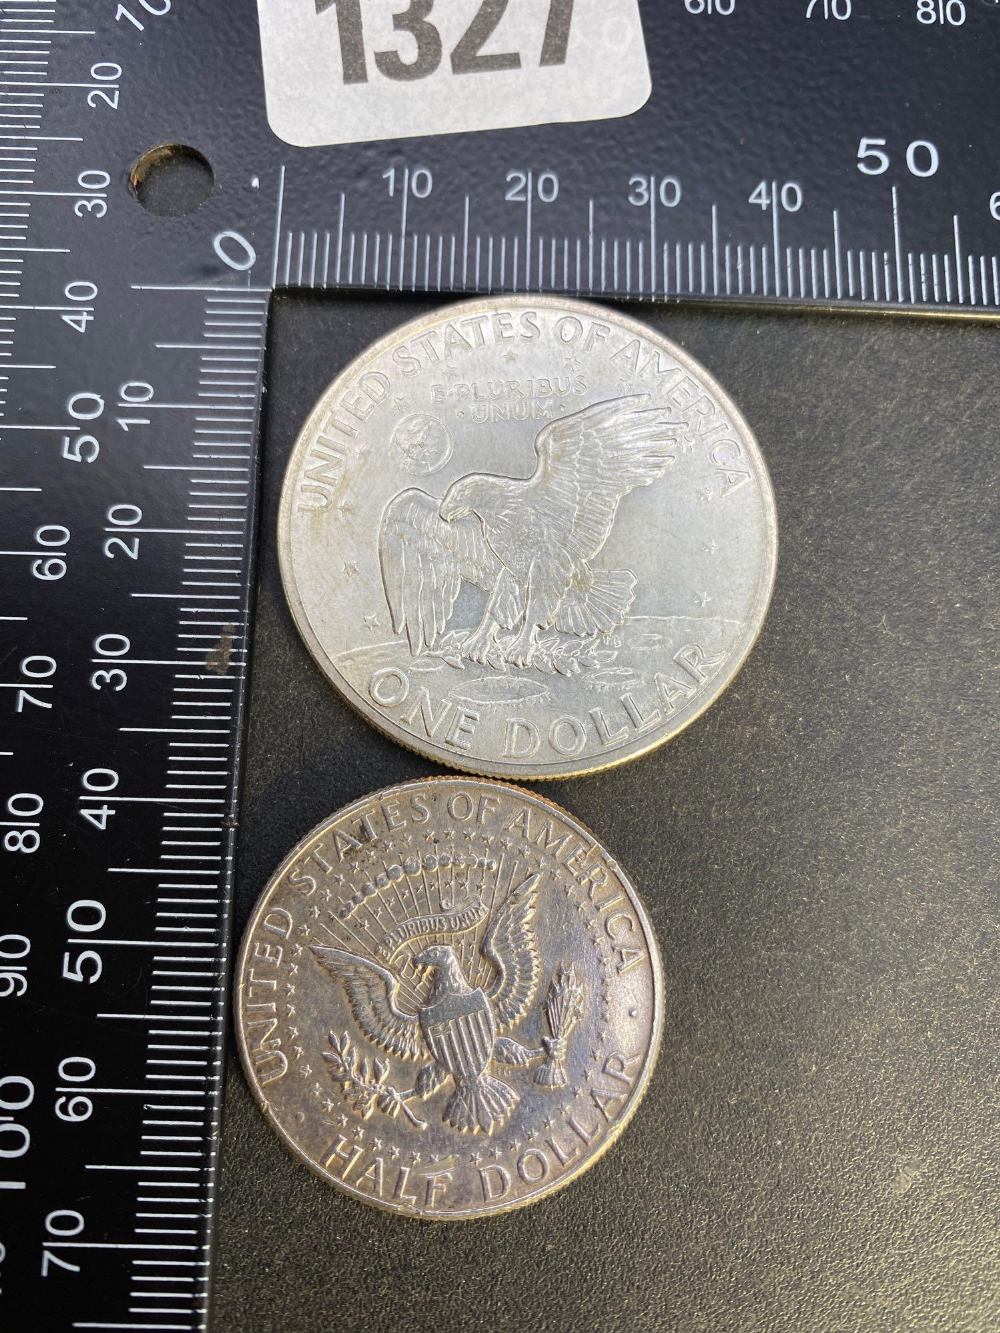 1971 USA dollar and 1964 half-dollar - Image 2 of 2